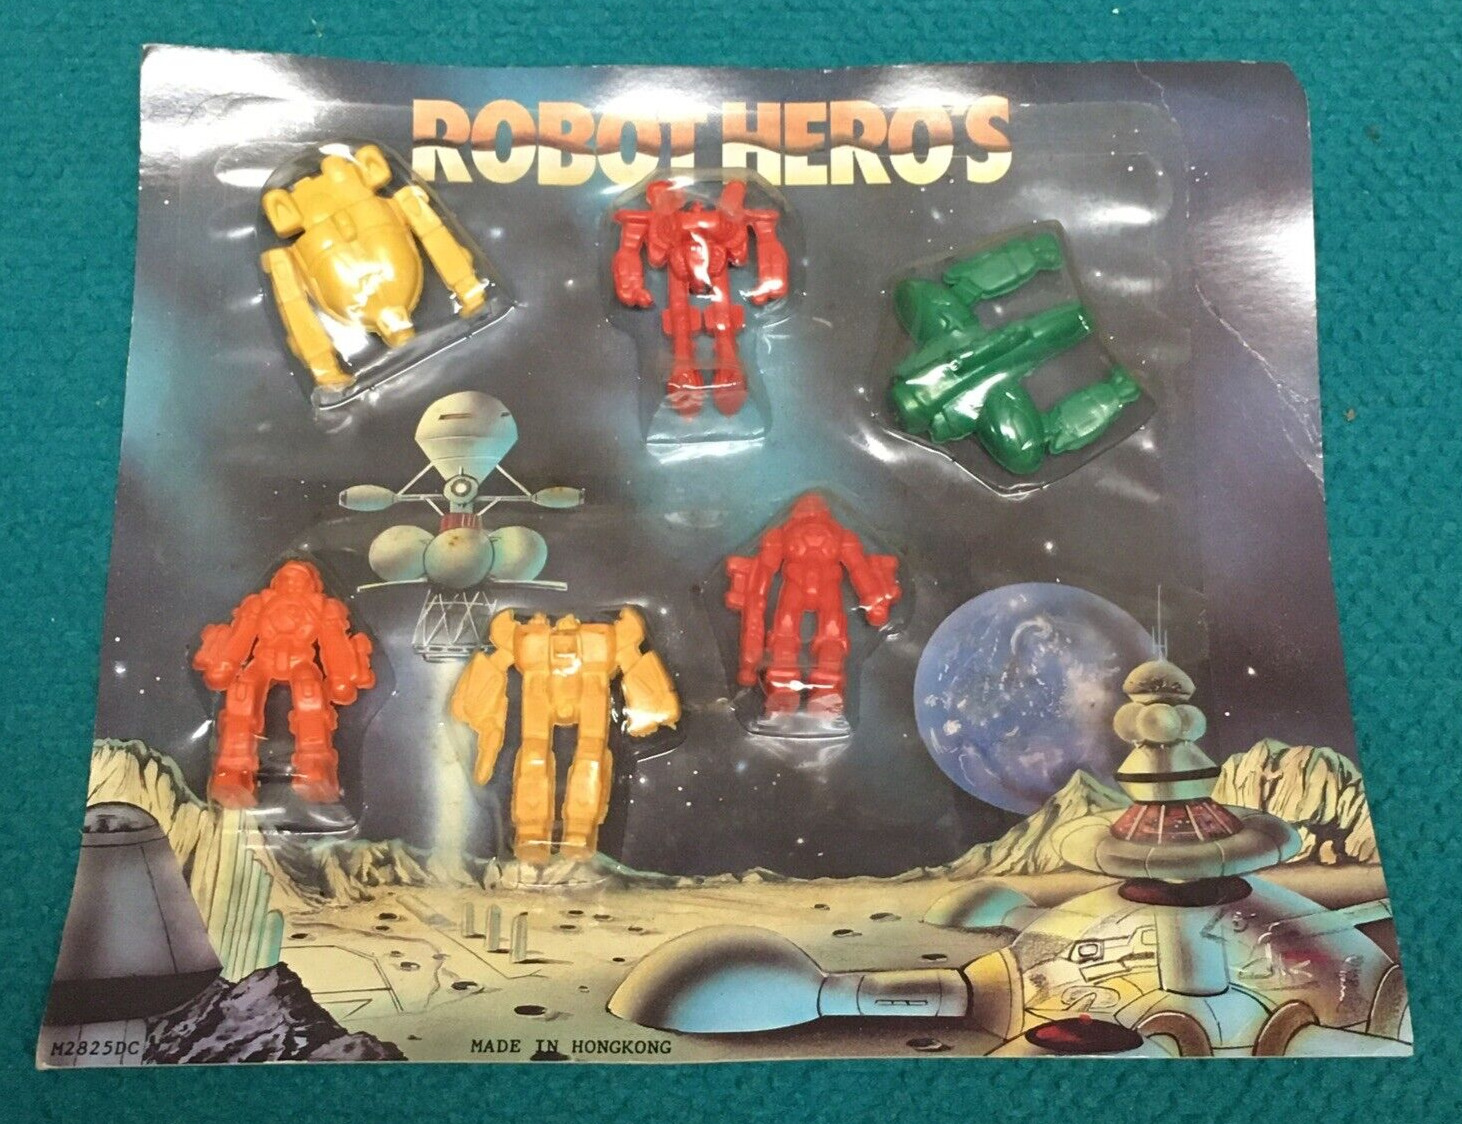 Vintage : ROBOT HEROS gumball VENDING MACHINE display HEADER CARD @ Space SCI-FI